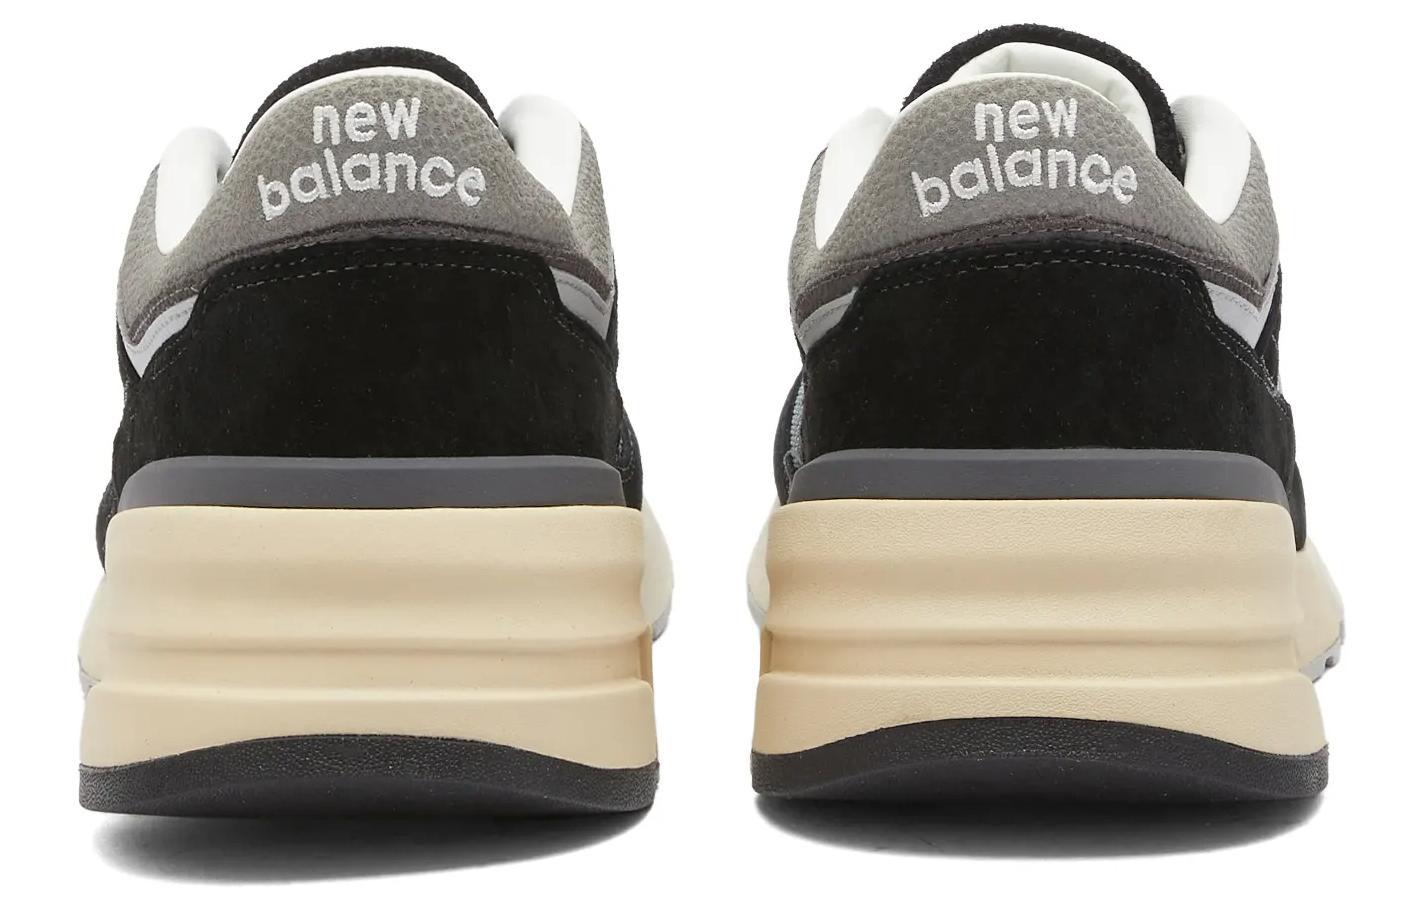 New Balance NB 997R